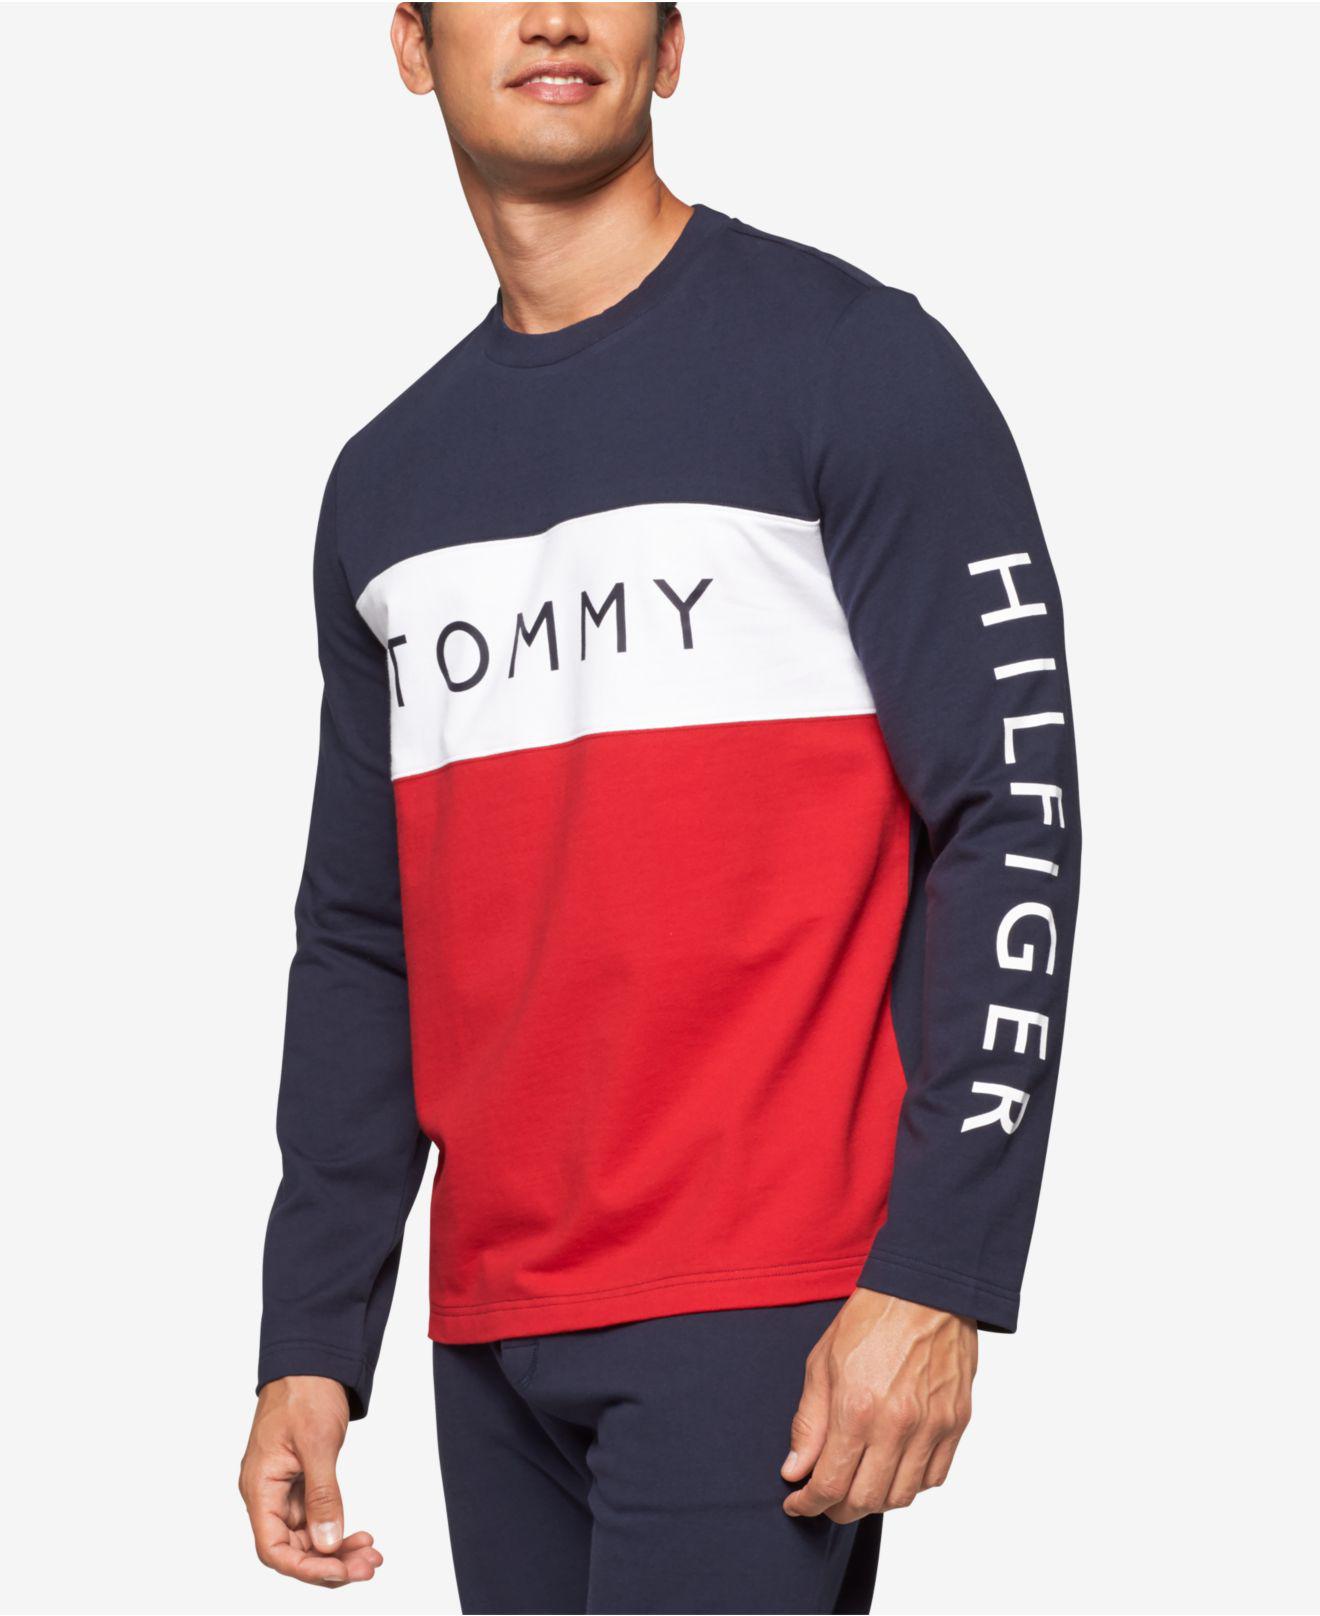 Tommy Hilfiger Long Sleeve Top Mens Germany, SAVE 33% - mpgc.net